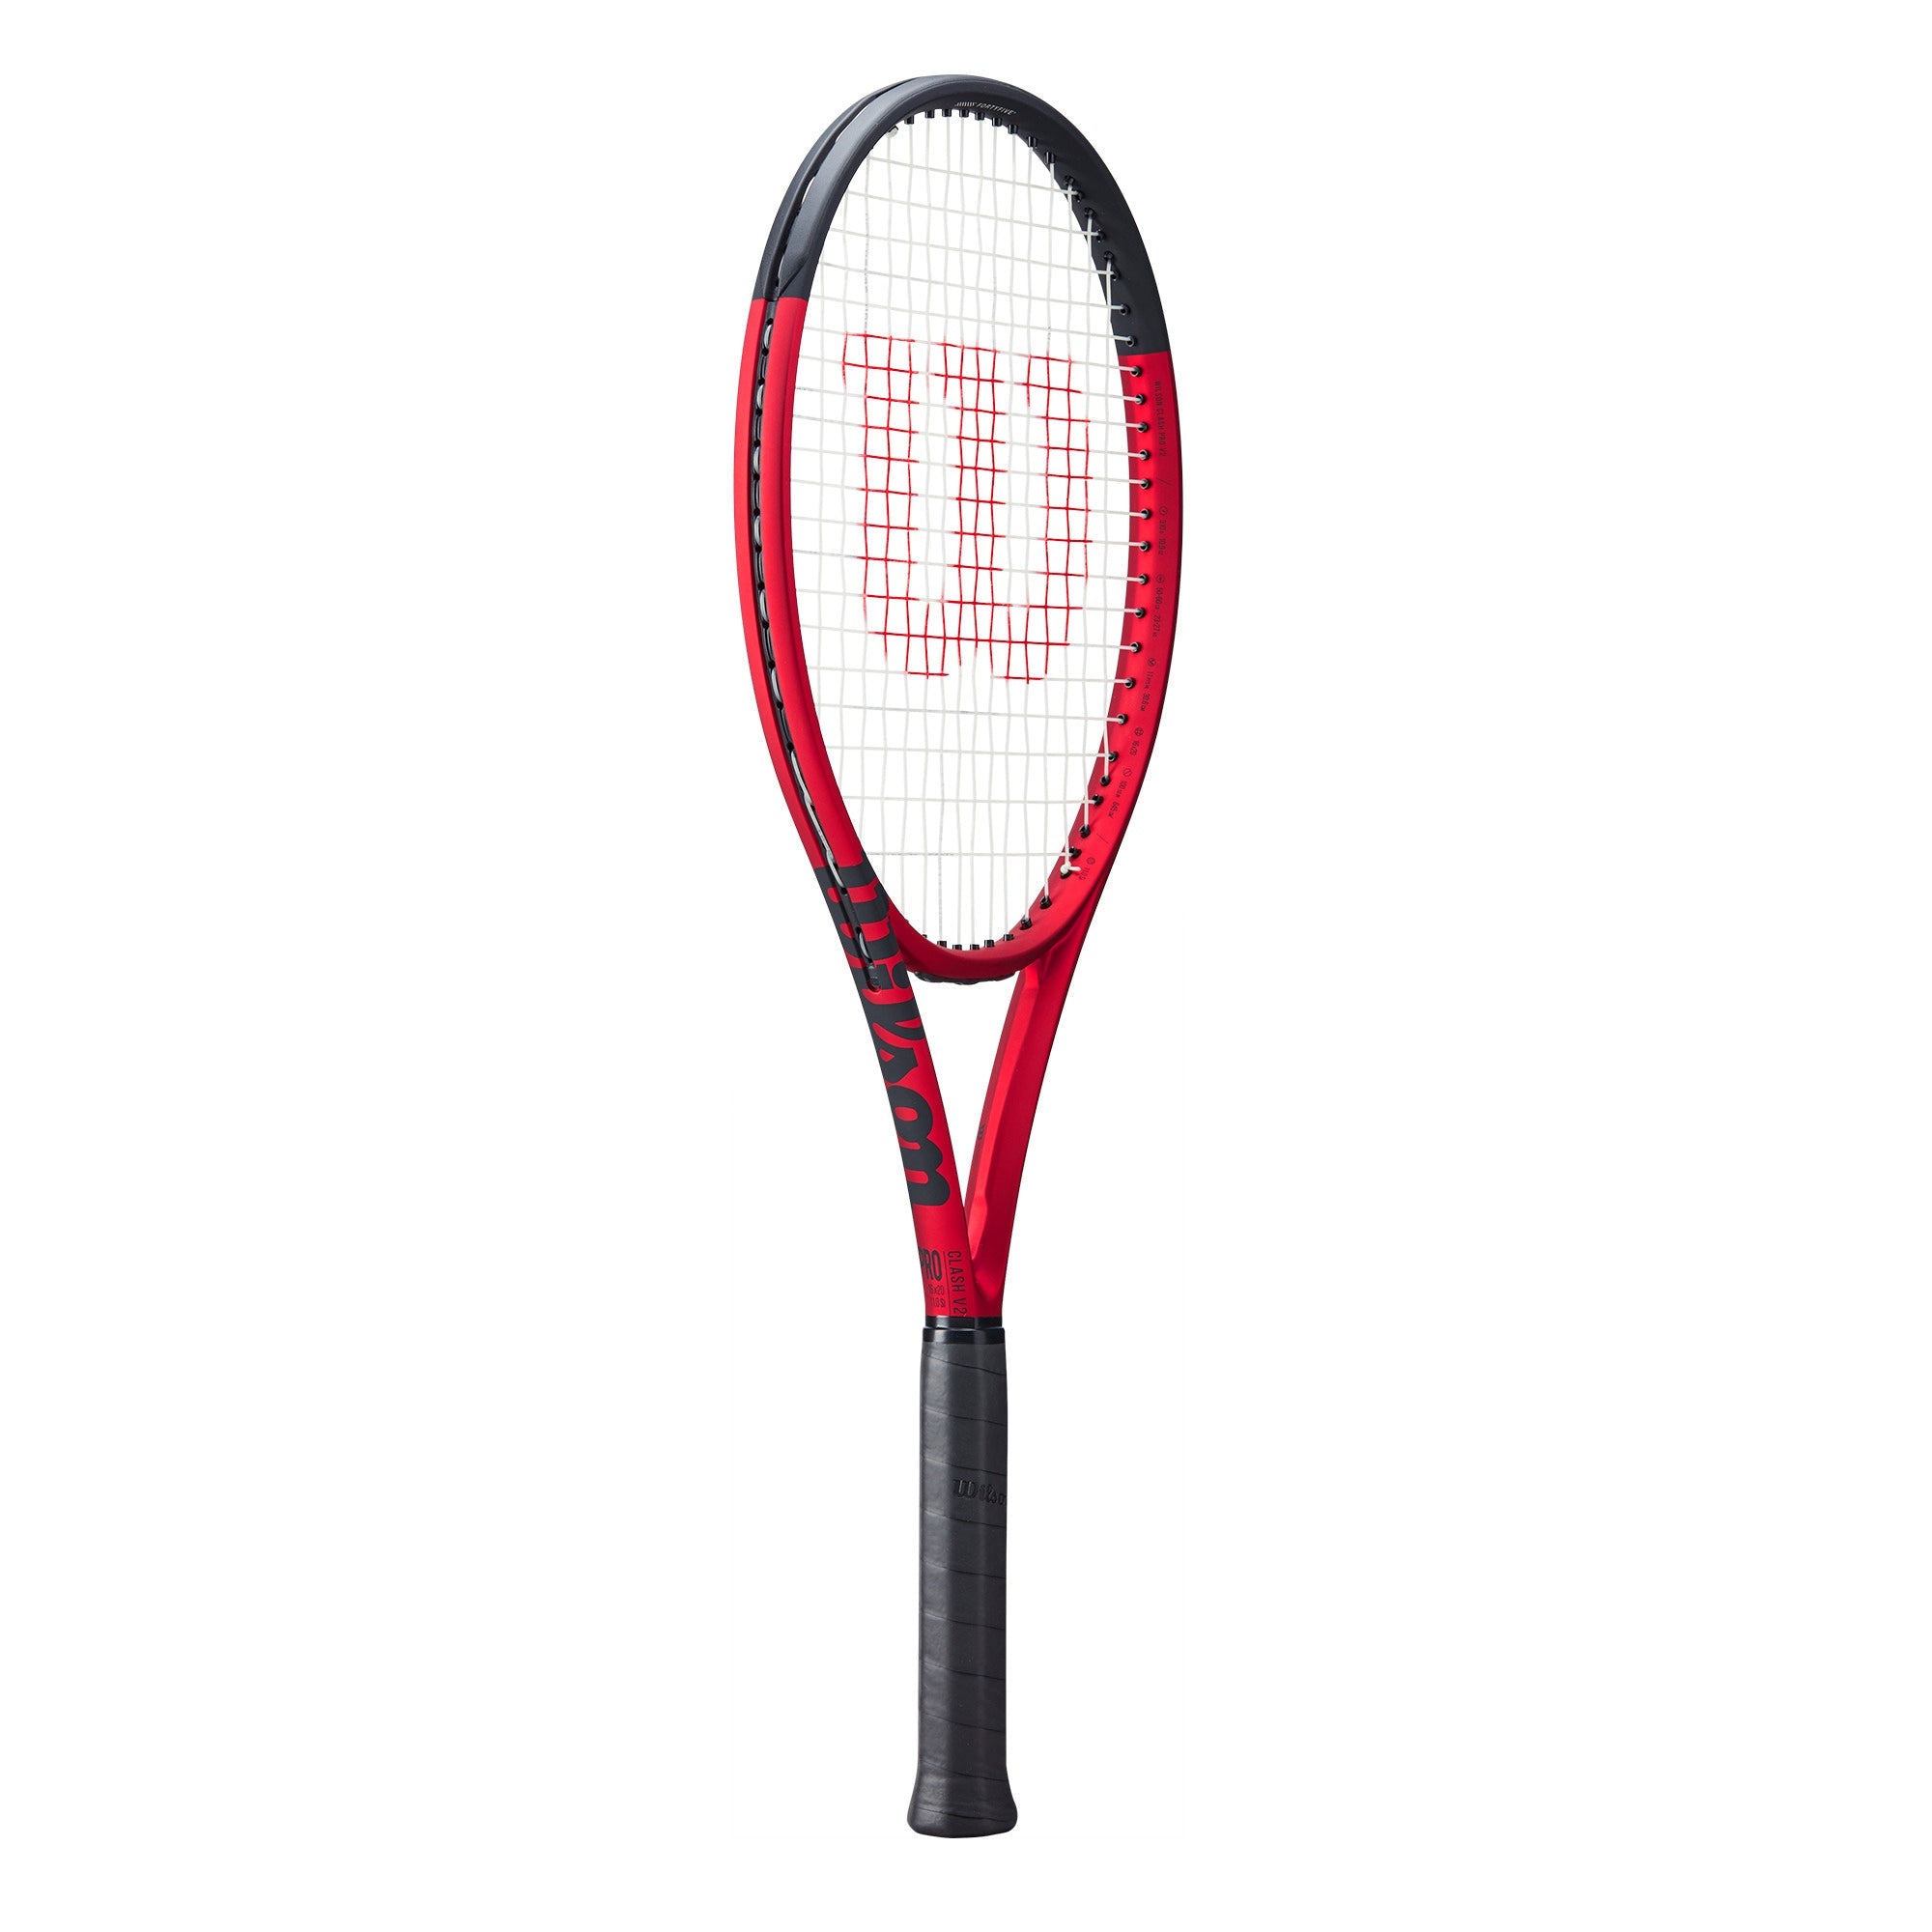 Clash 100 Pro v2.0 Tennis Racket Frame